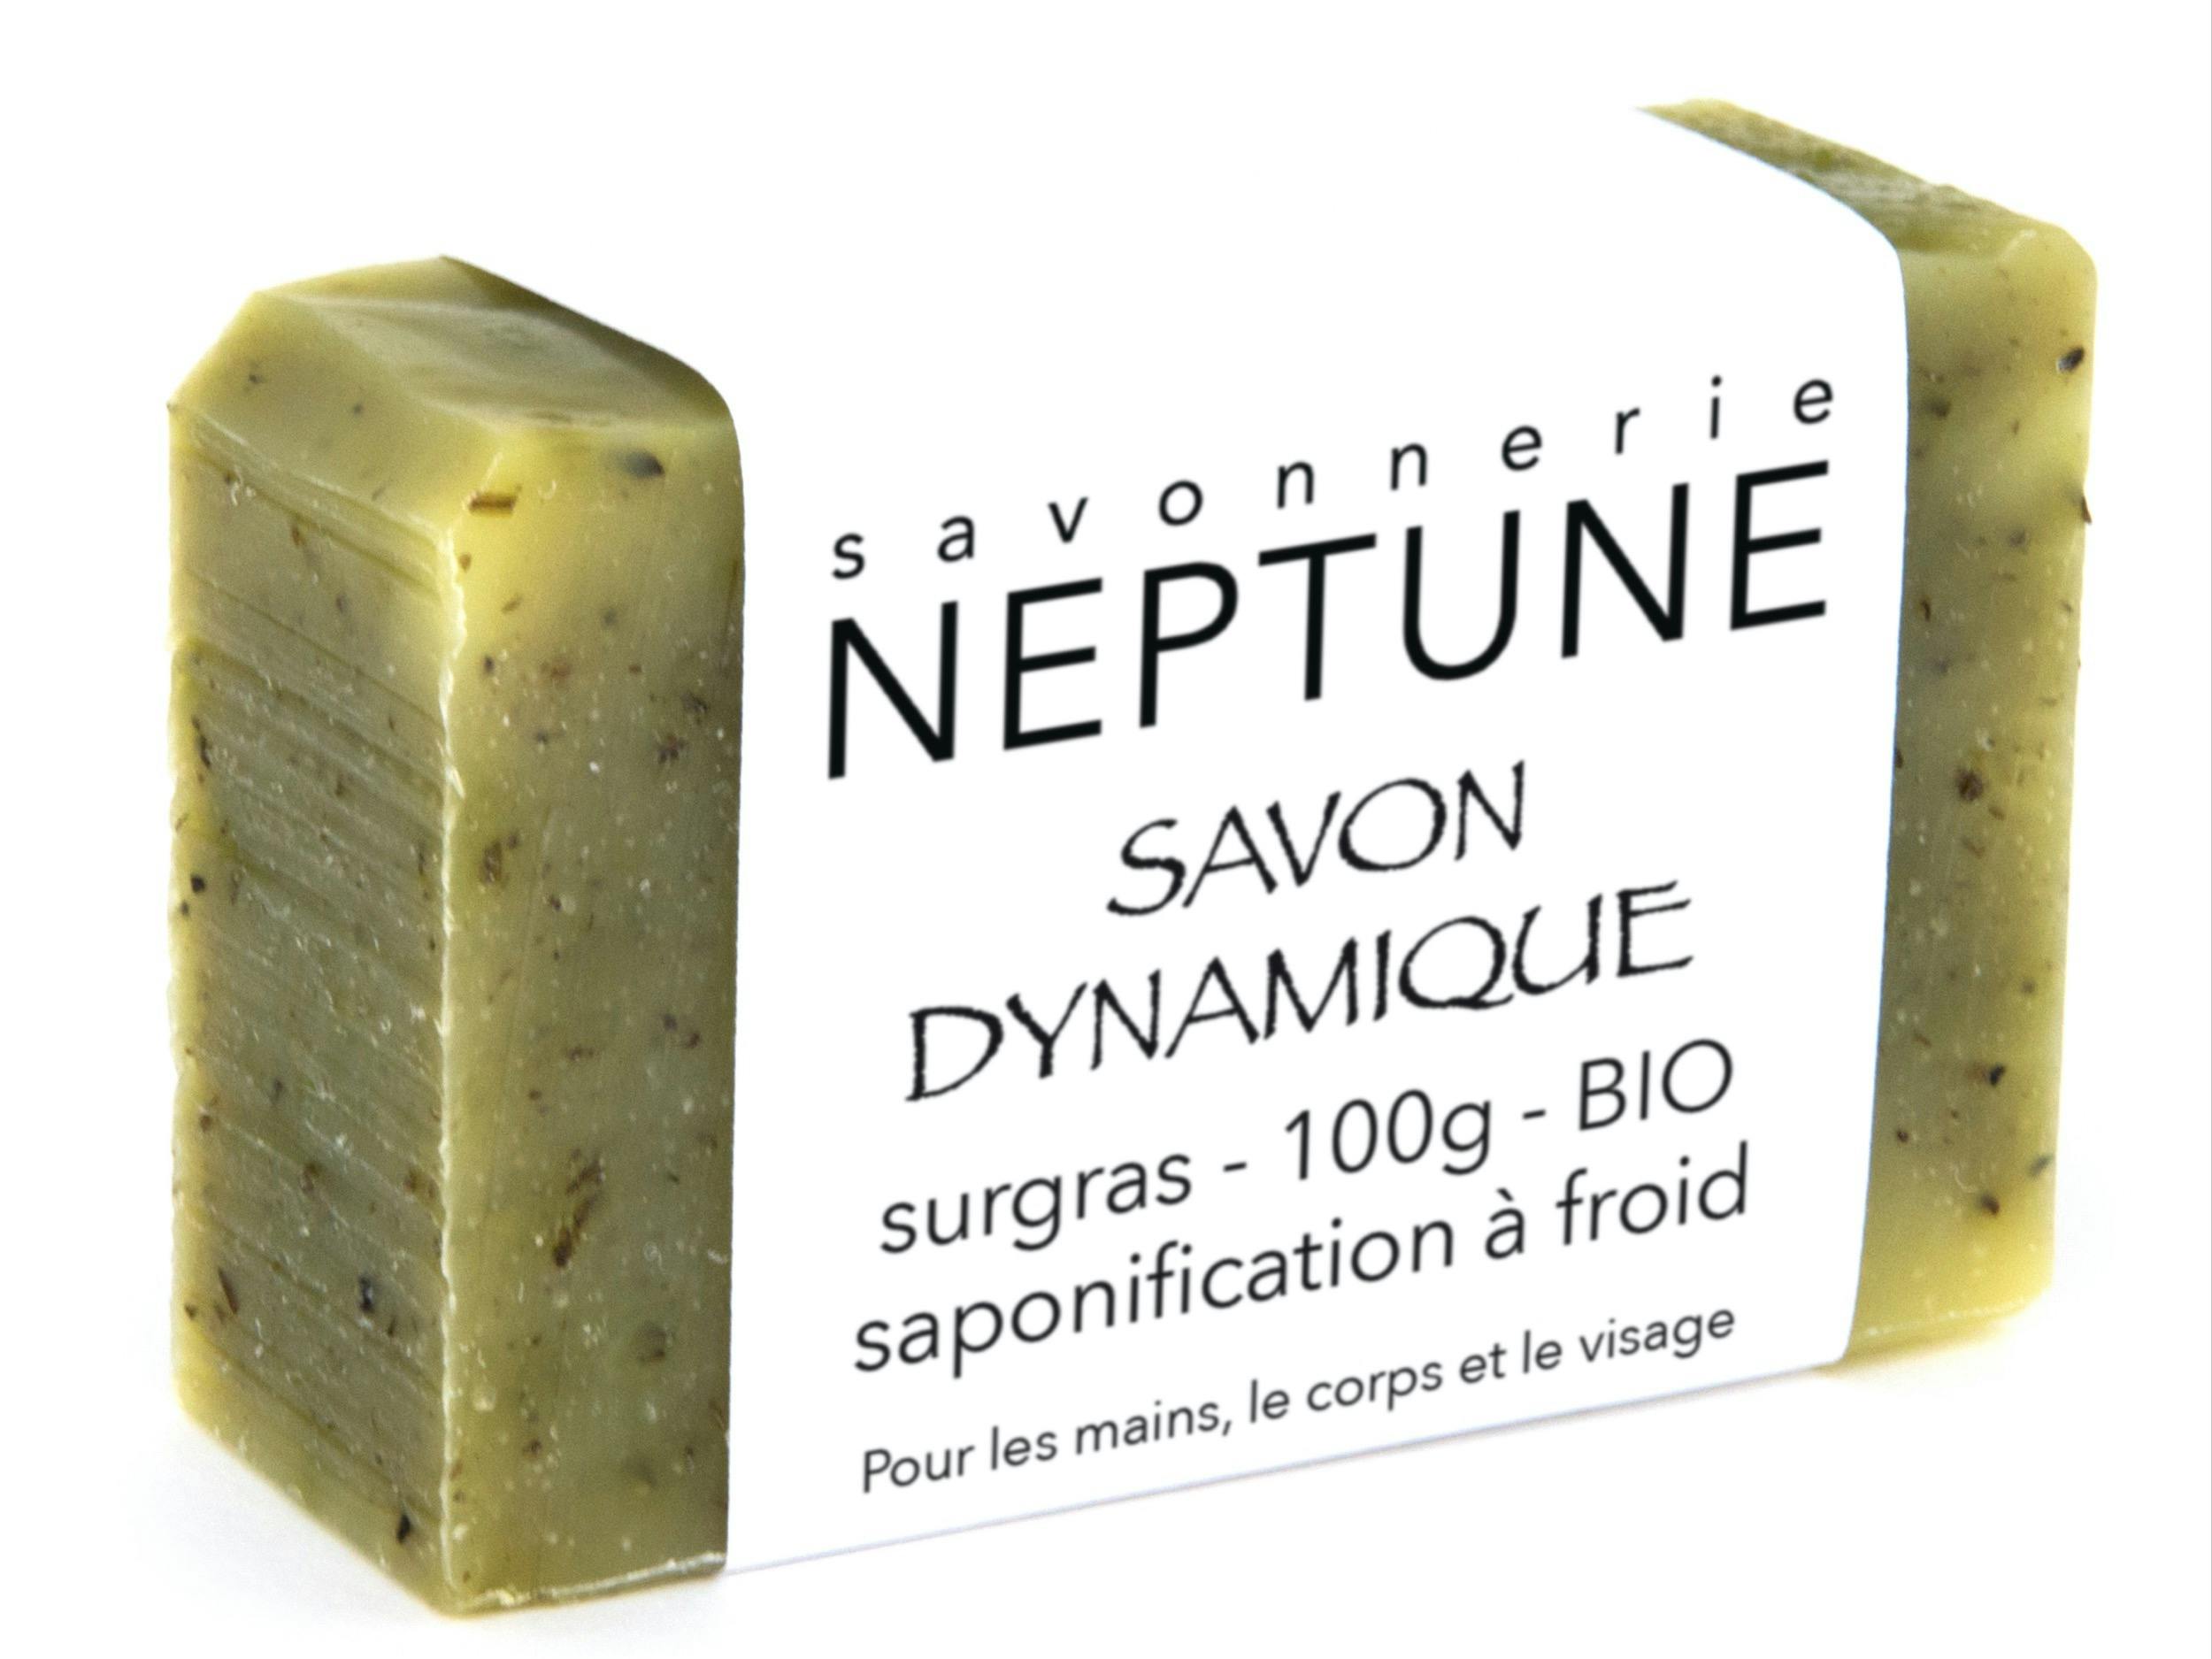 Dynamic soap - organic image 2